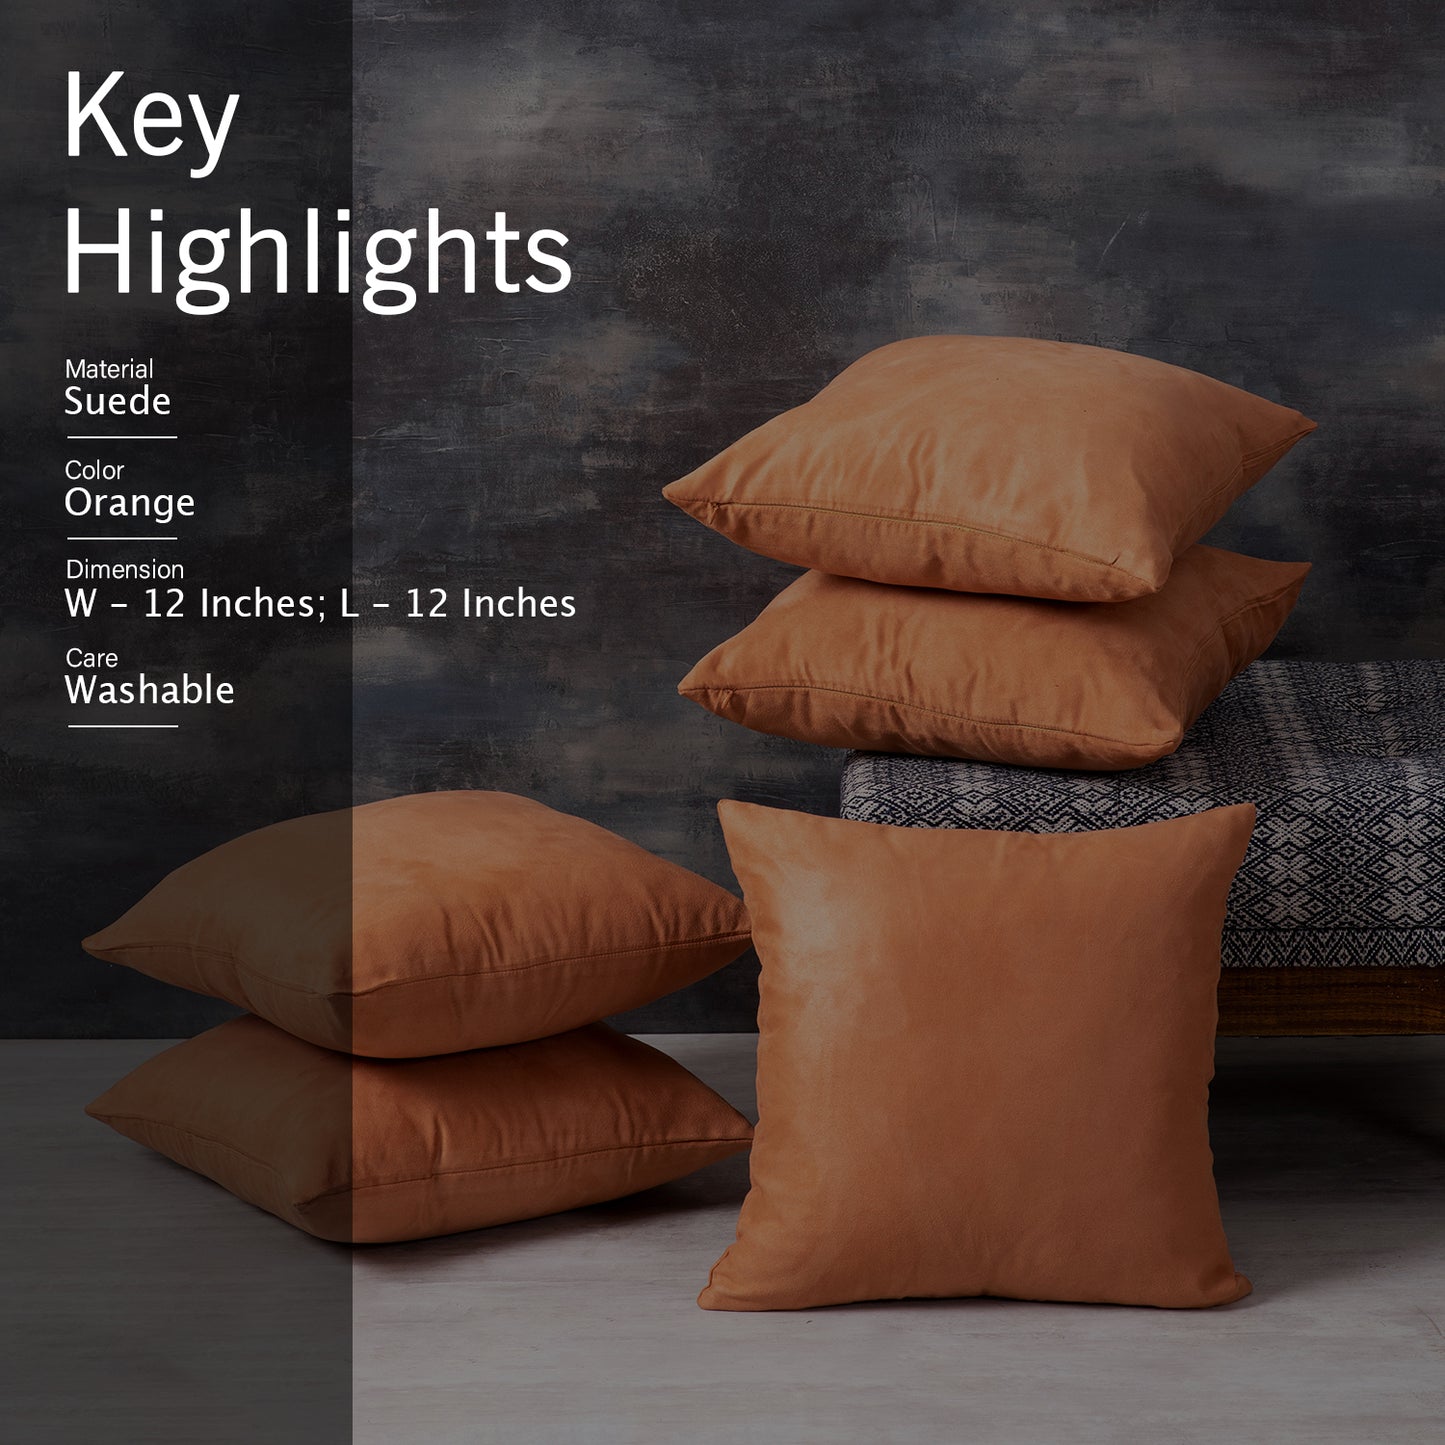 Lush Velvet Cushion Cover Orange 16 X 16 Inches Set of 5